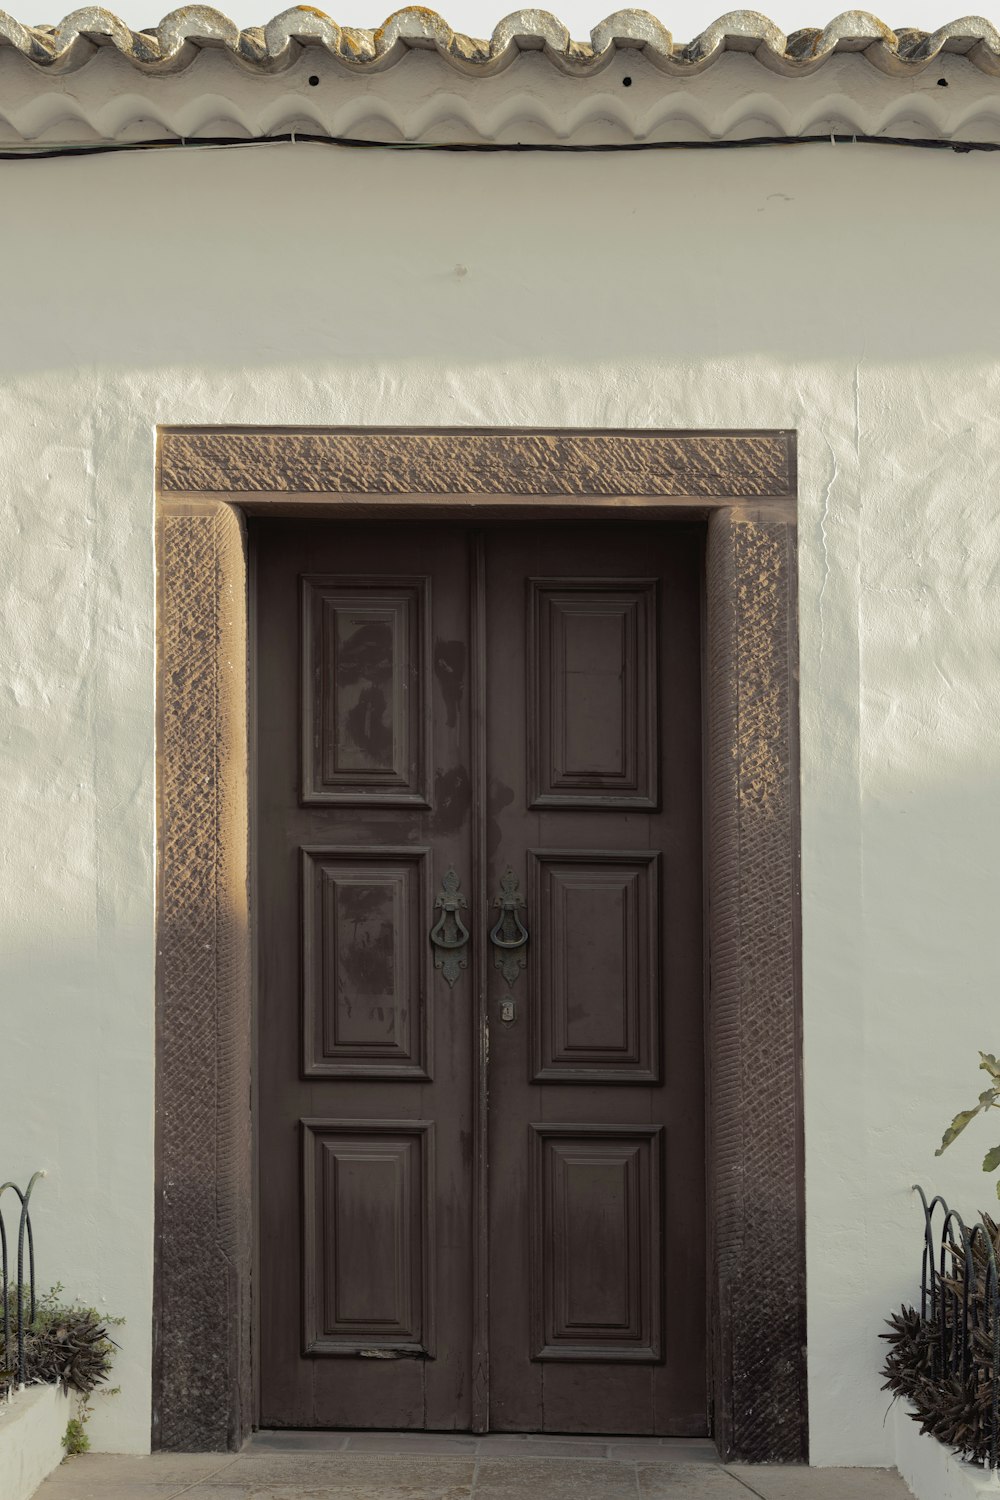 una grande porta marrone seduta accanto a un edificio bianco